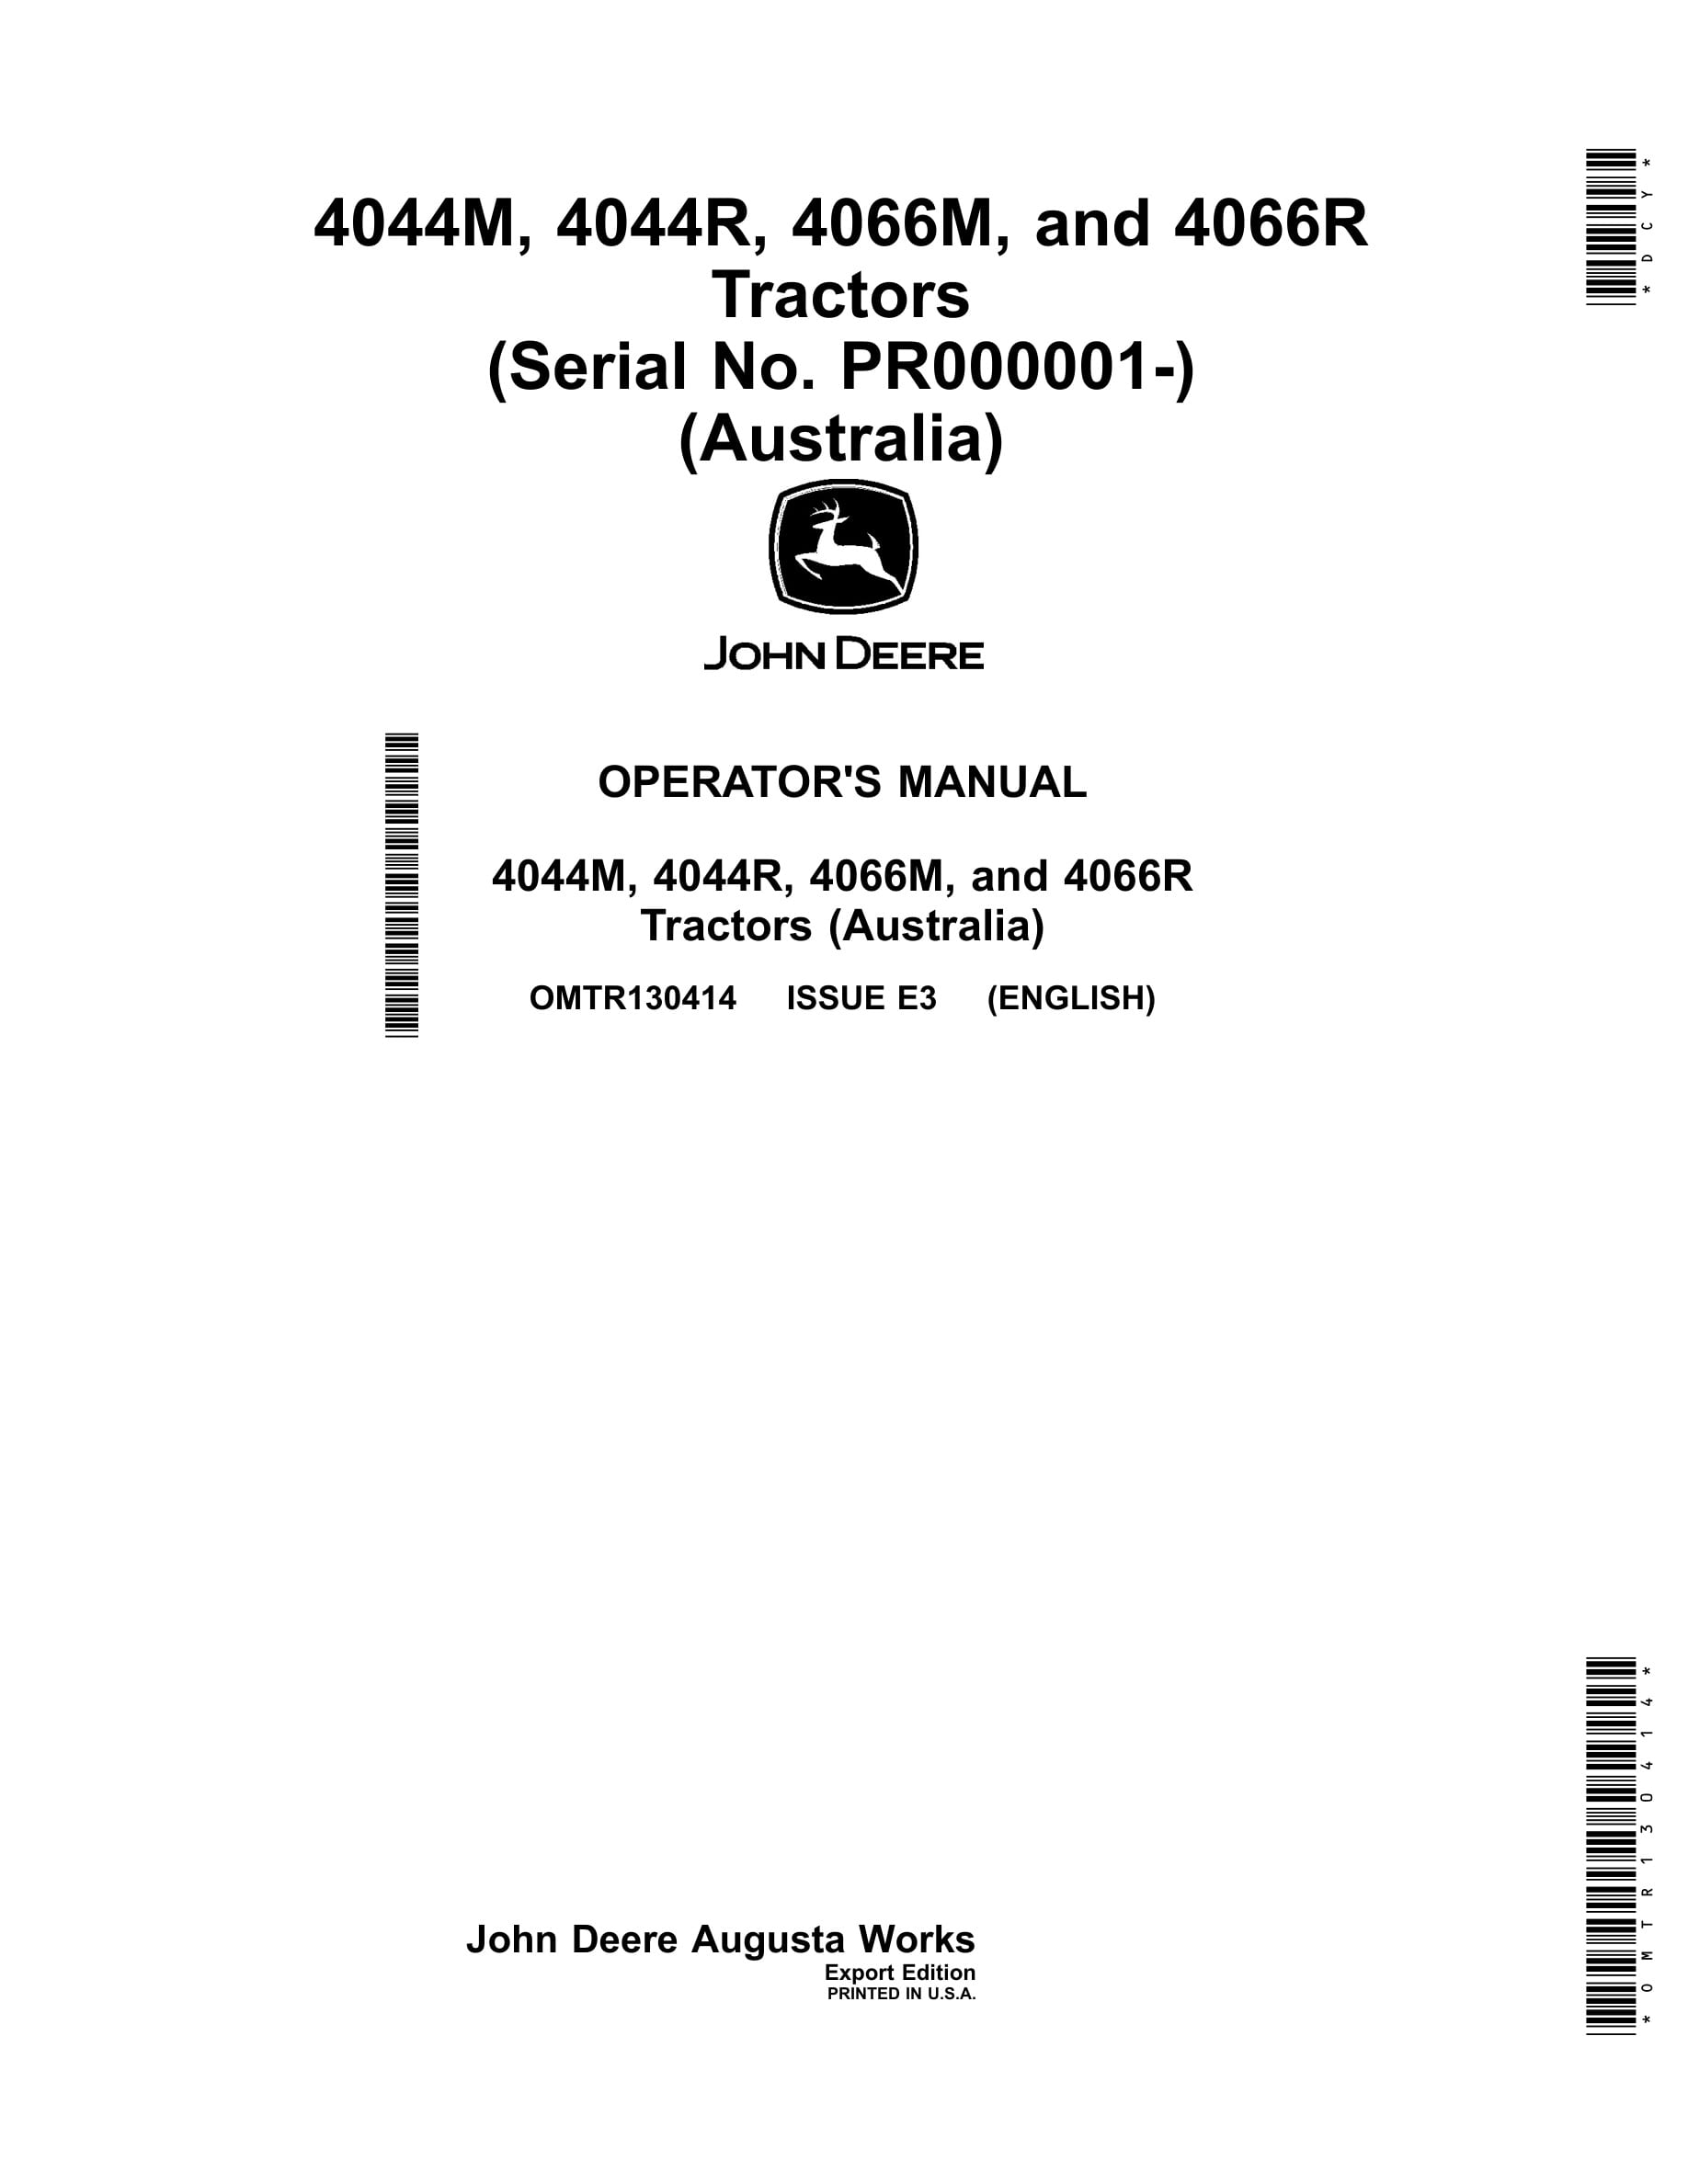 John Deere 4044m, 4044r, 4066m, And 4066r Tractors Operator Manuals OMTR130414-1